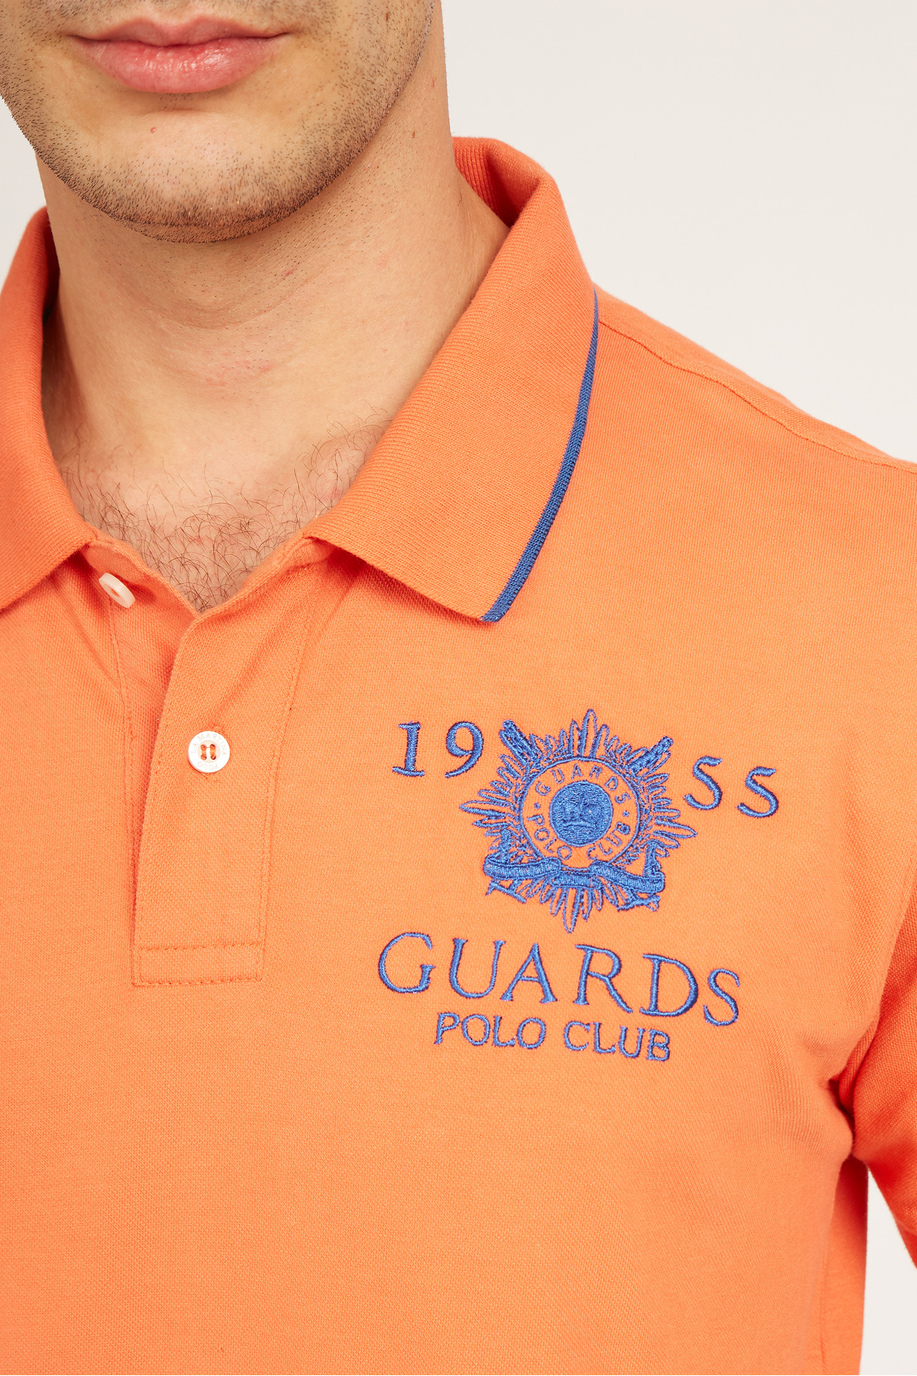 Herren-Kurzarm-Poloshirt aus Stretch-Baumwolle mit normaler Passform - Vilmos - Guards - England | La Martina - Official Online Shop